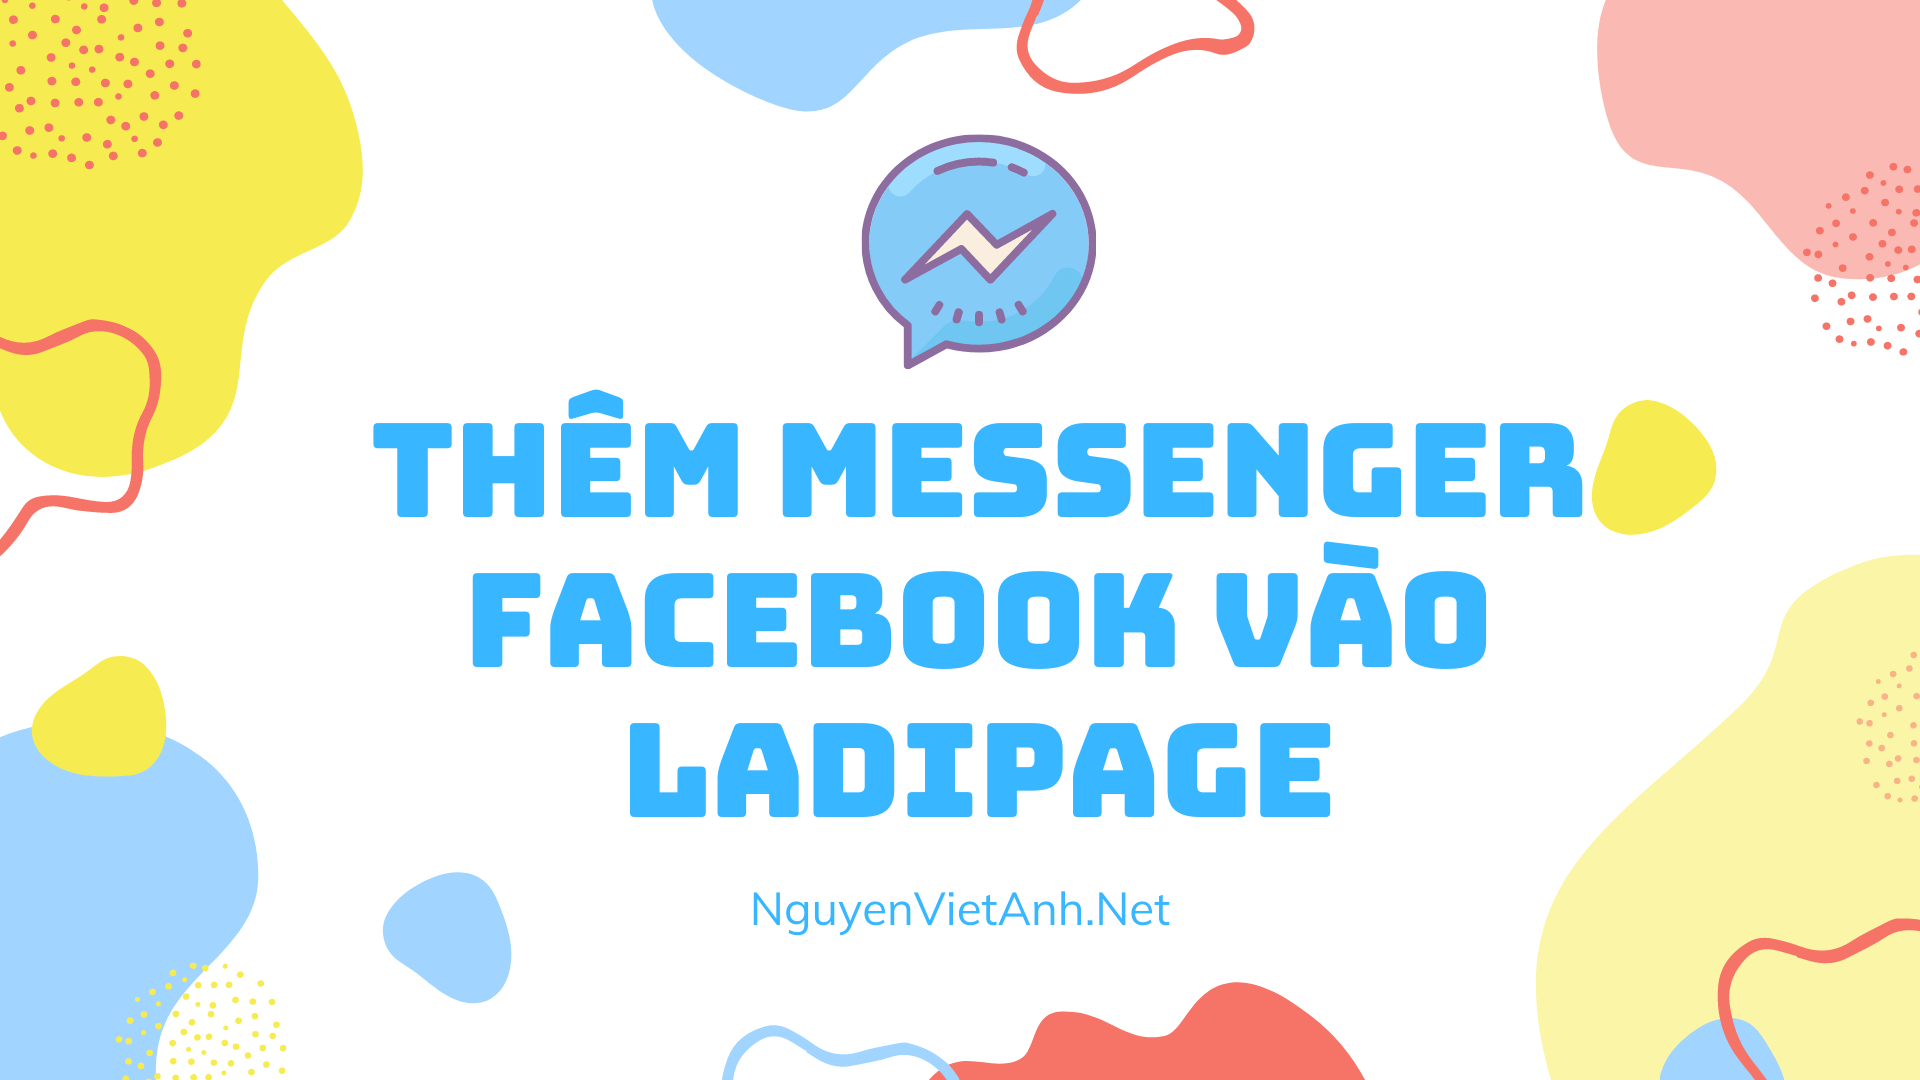 Hé lộ cách thêm Messenger Facebook vào Ladipage